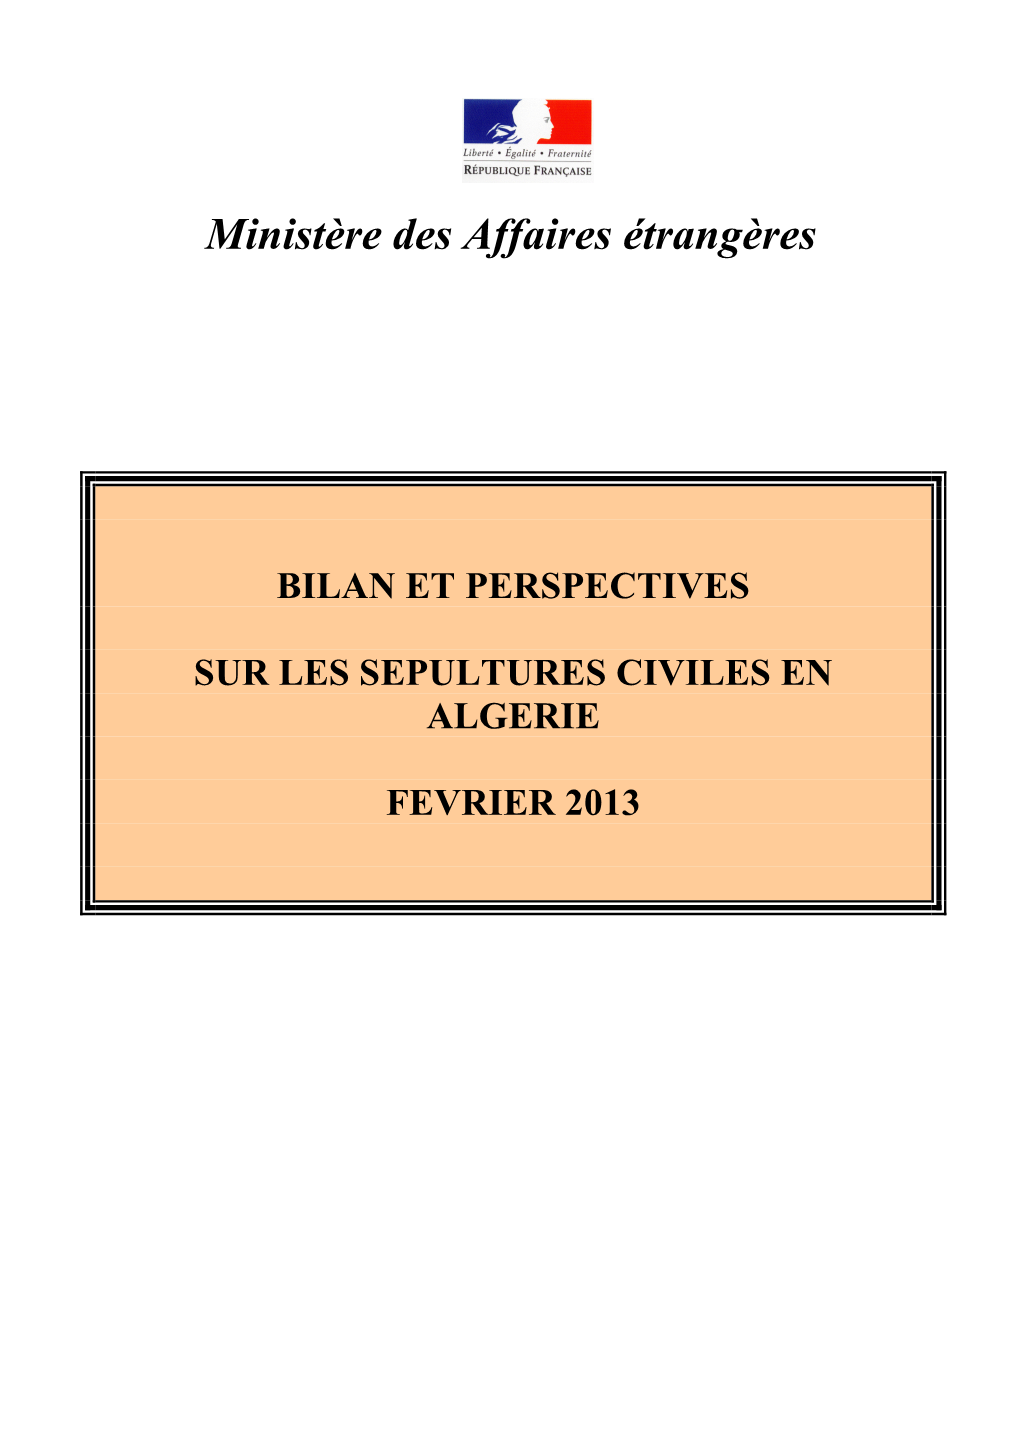 BILAN 2013 Sepulutures Algerie